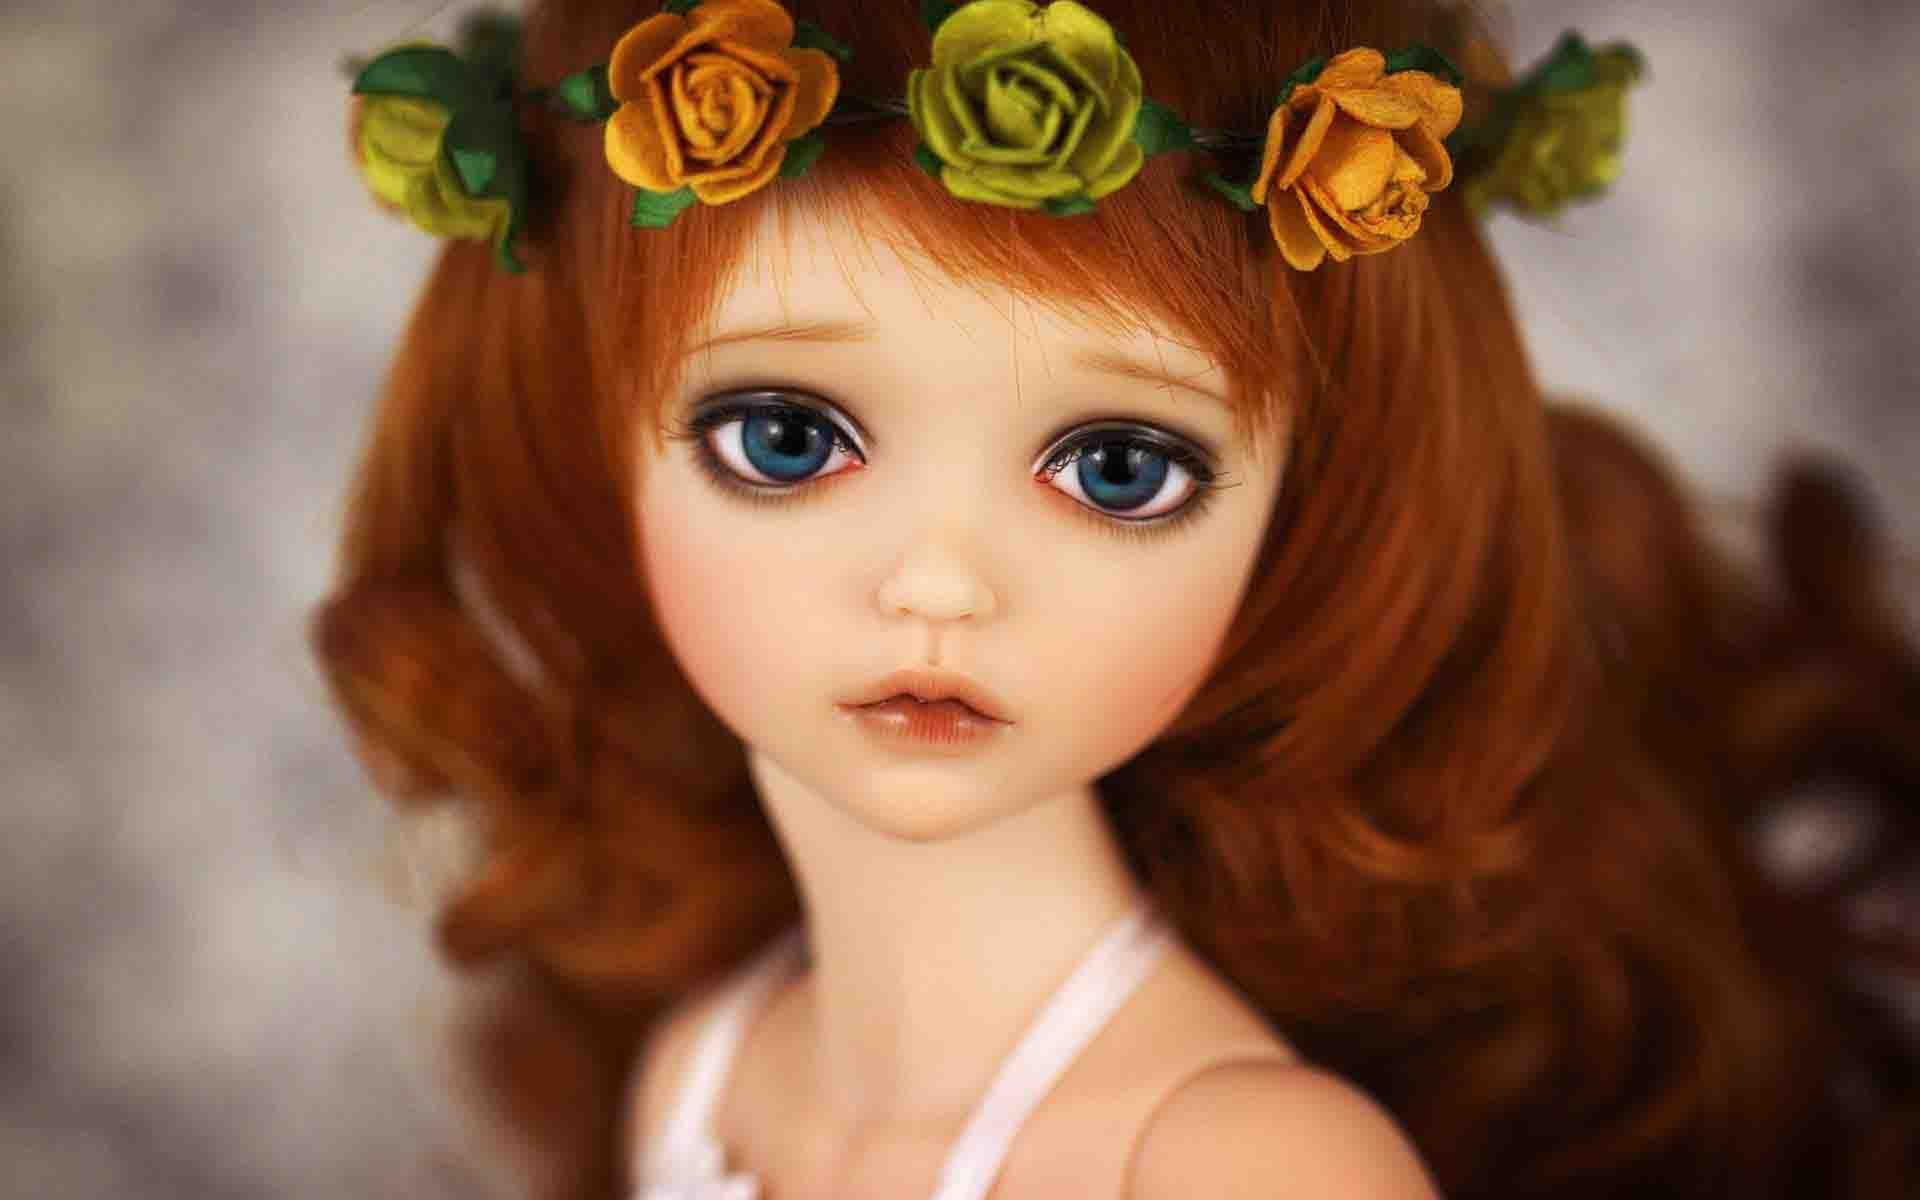 Beautiful Toy Girl HD Wallpaper Free Download. Full HD Wallpaper Free Download. Beautiful barbie dolls, Doll image hd, Cute dolls